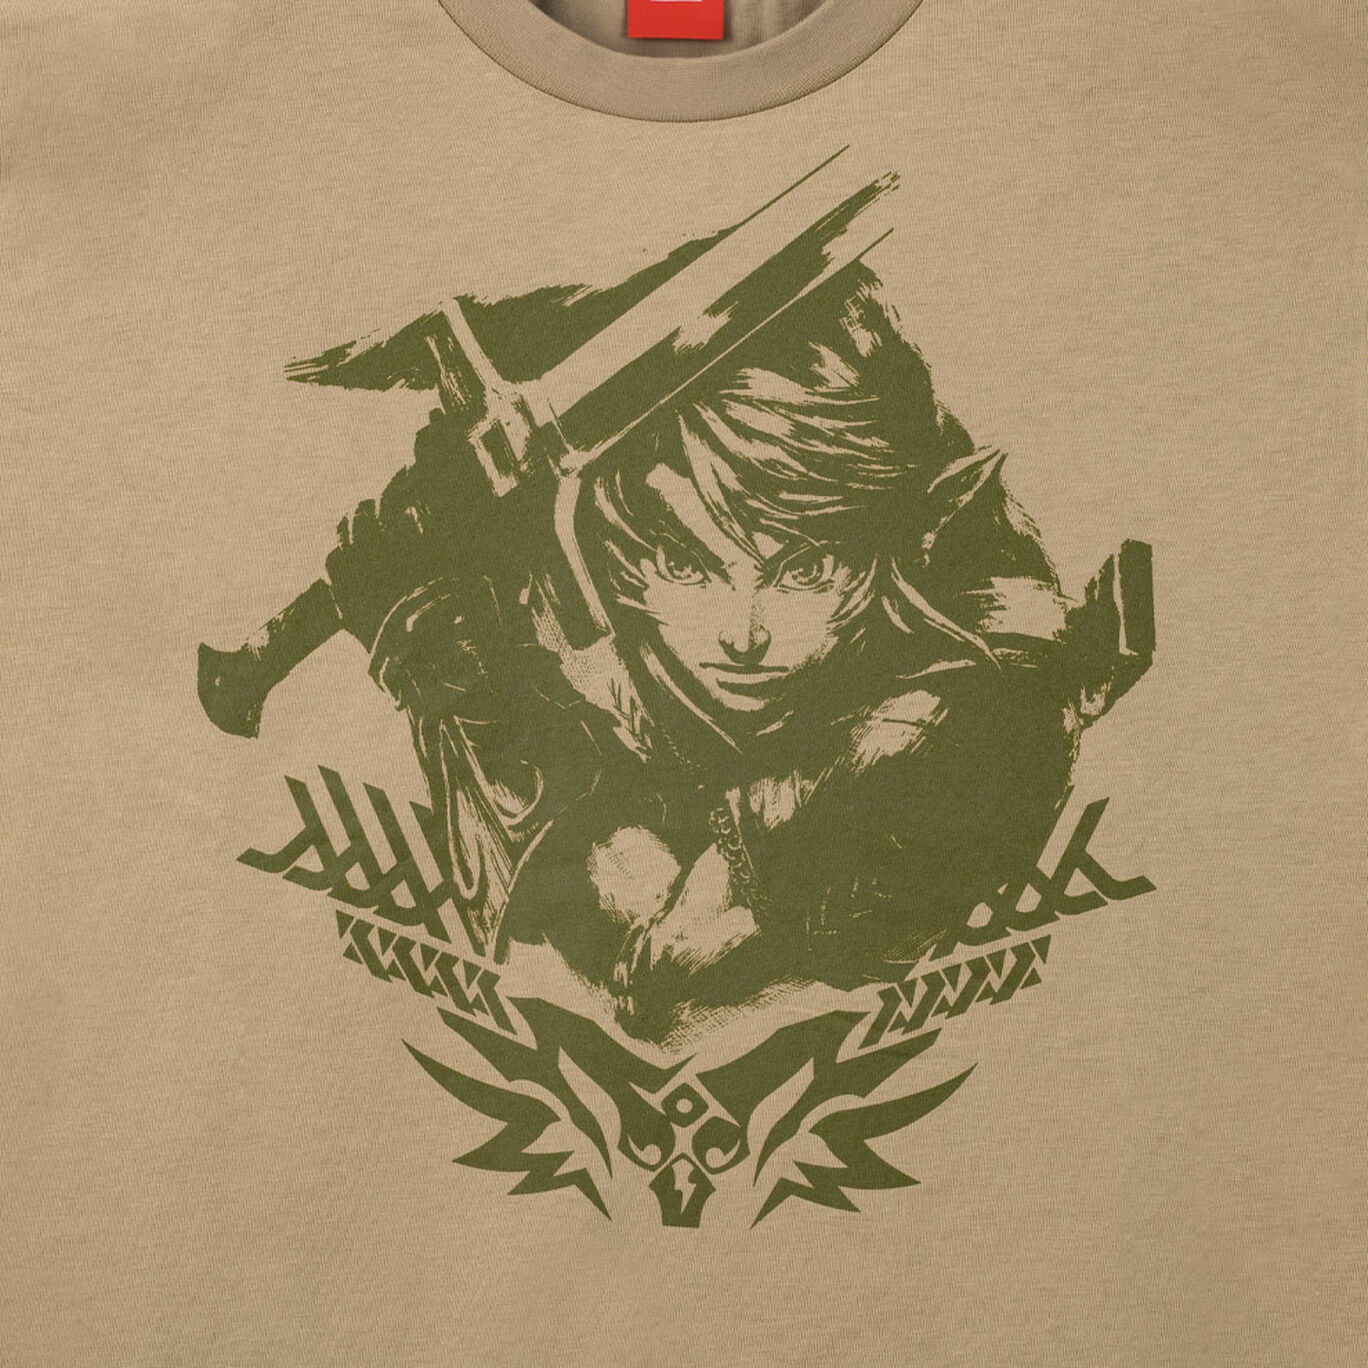 Tシャツ トライフォース リンク L ゼルダの伝説【Nintendo TOKYO取り扱い商品】